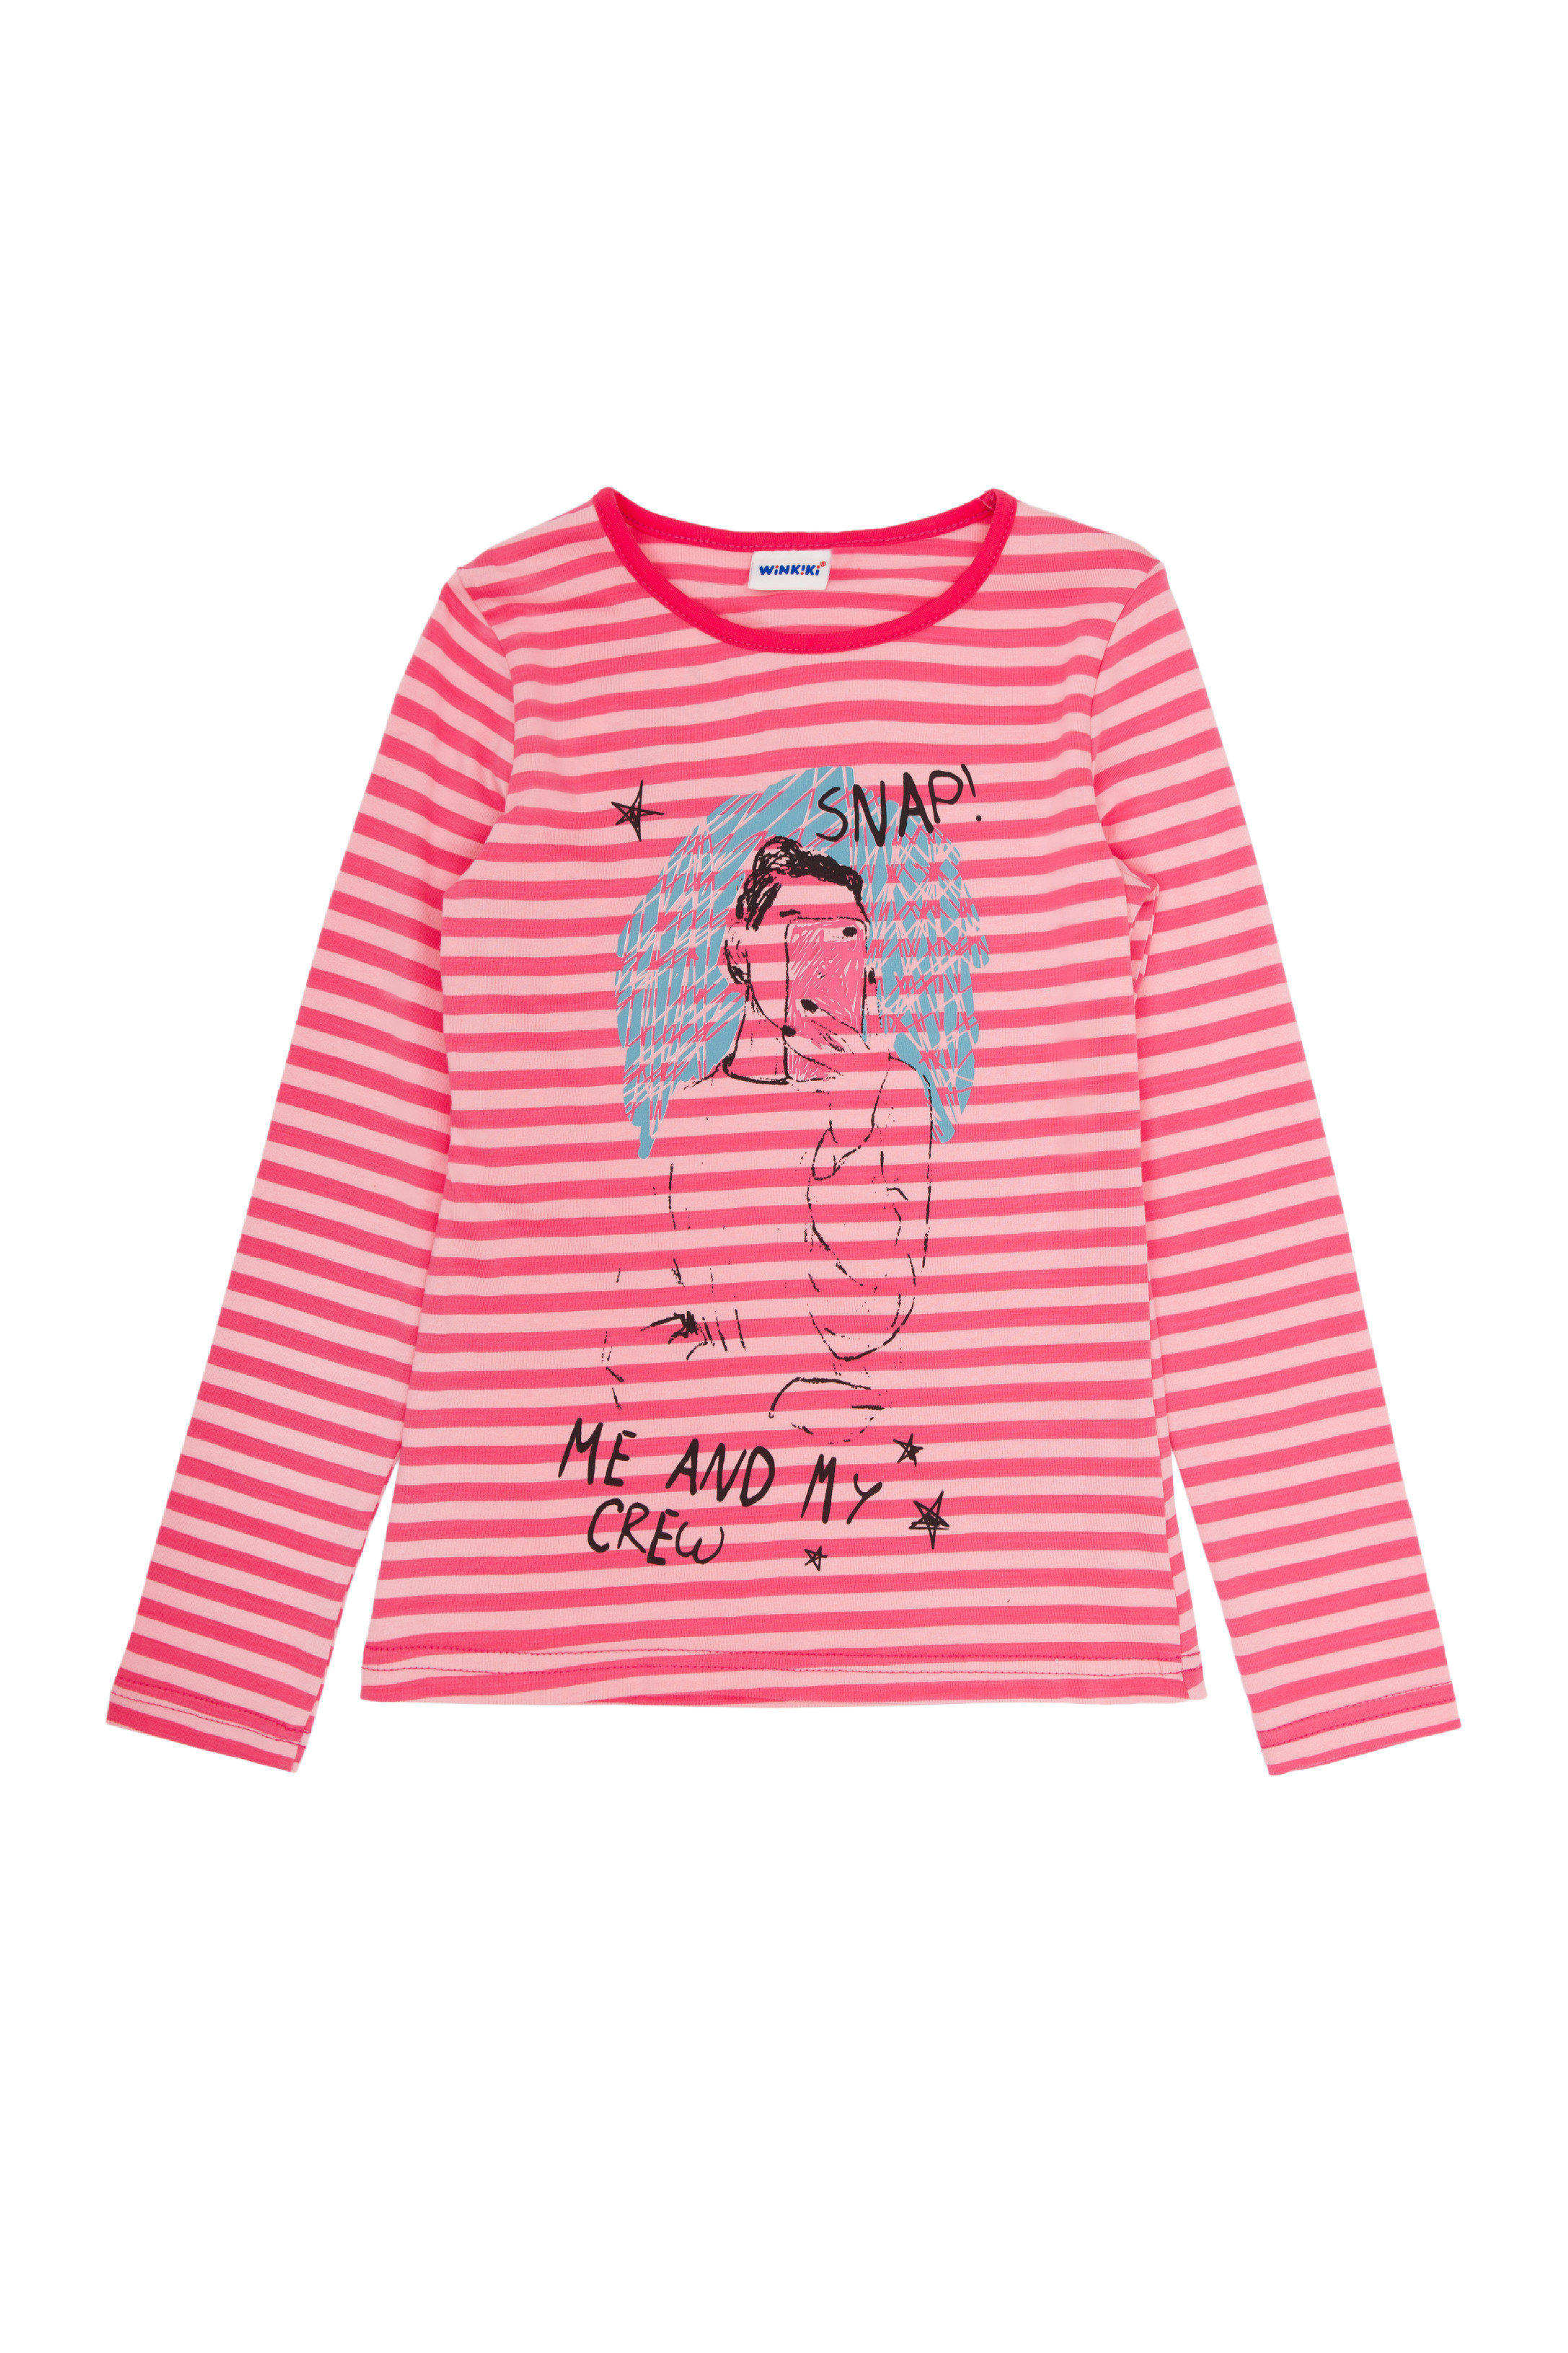 Dívčí triko - Winkiki WJG 01736, růžová Barva: Růžová, Velikost: 134